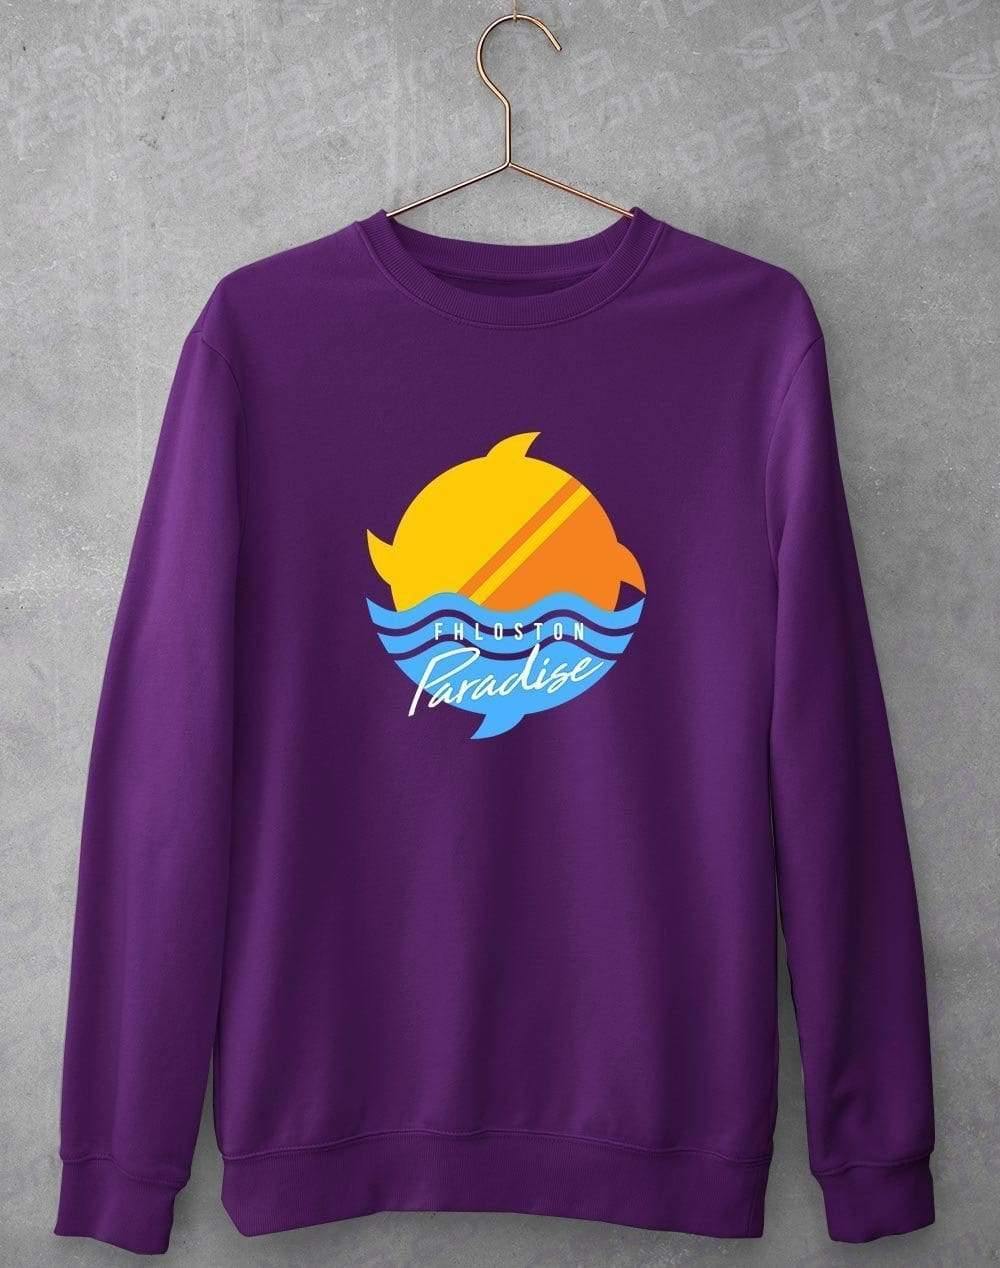 Fhloston Paradise Classic Sweatshirt S / Purple  - Off World Tees